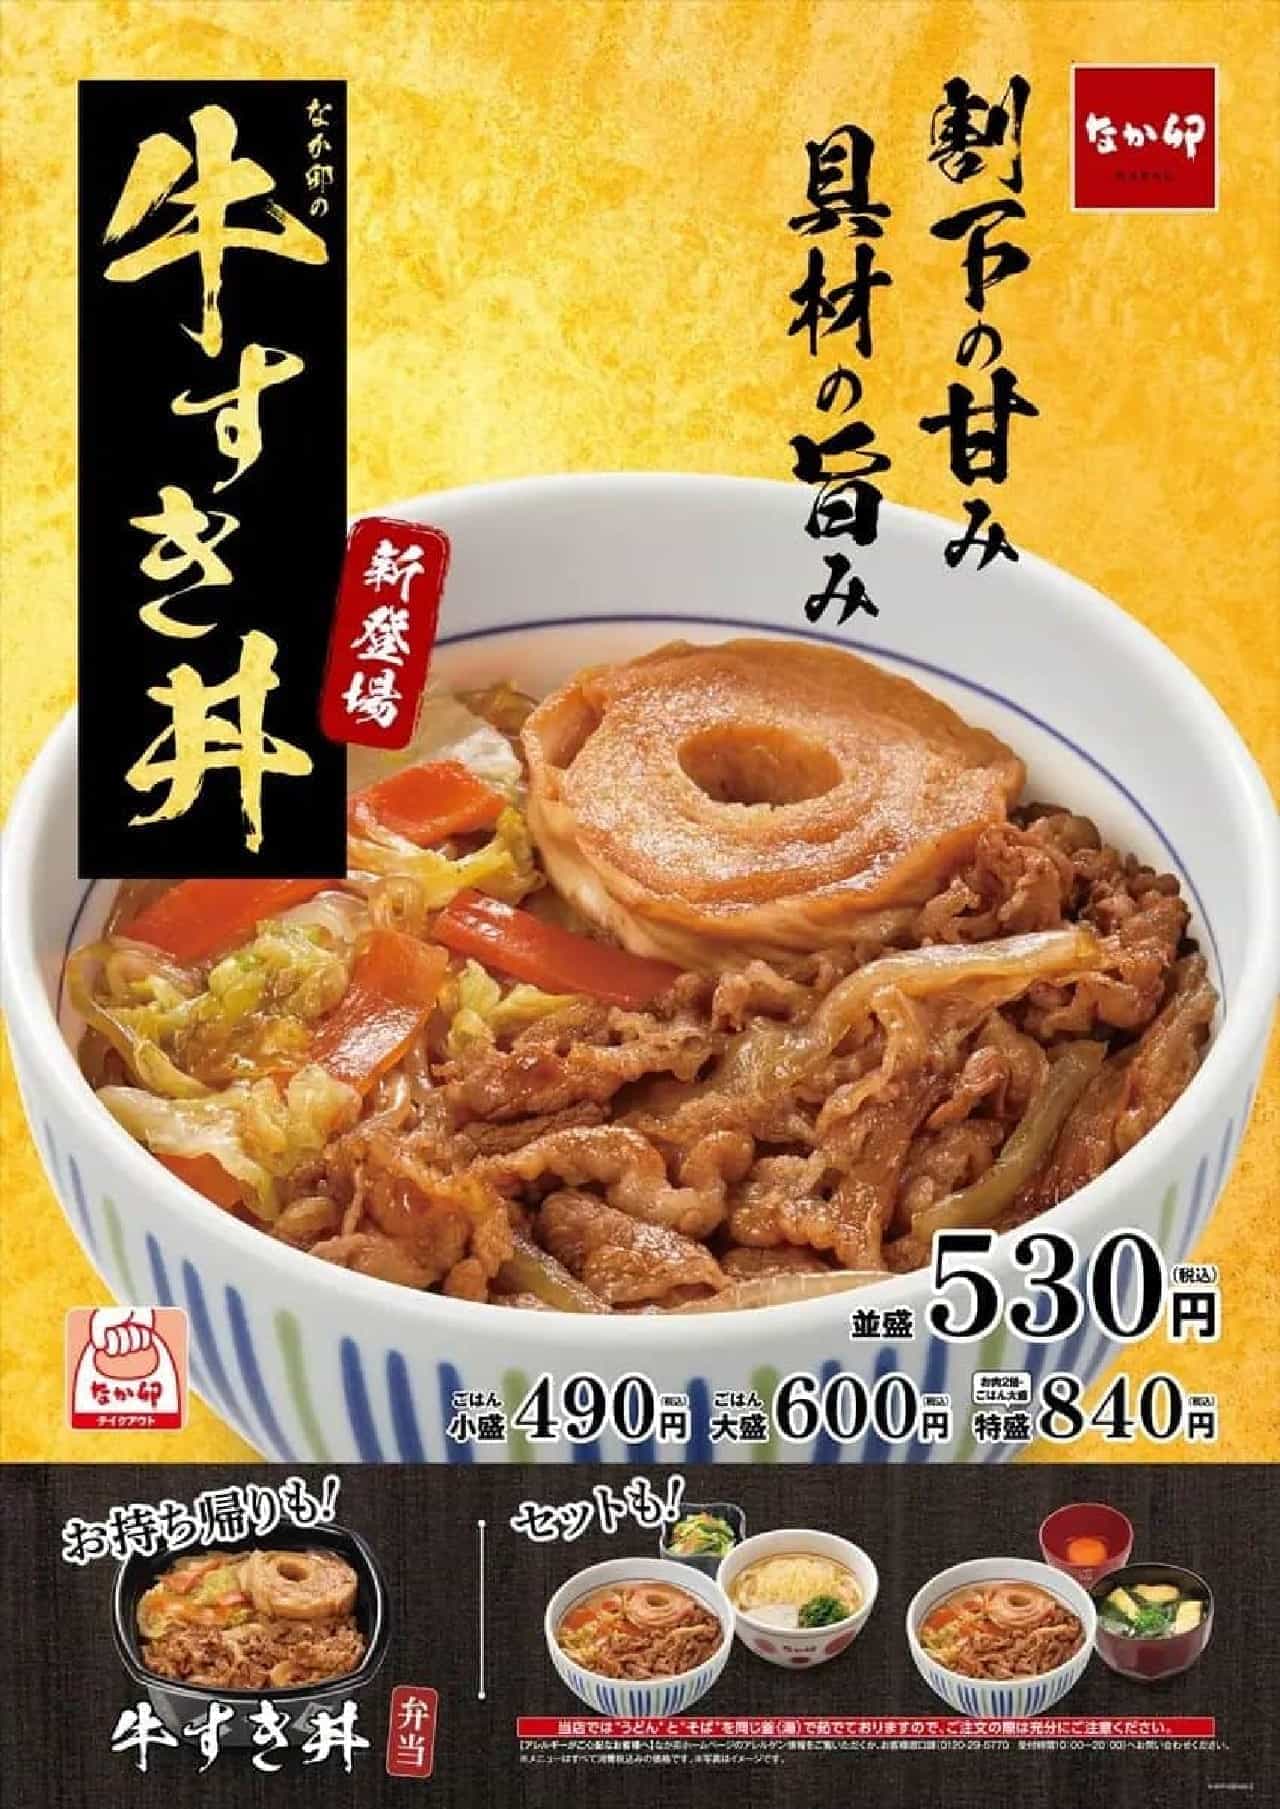 Nakau "Gyu-suki-don" (beef bowl)